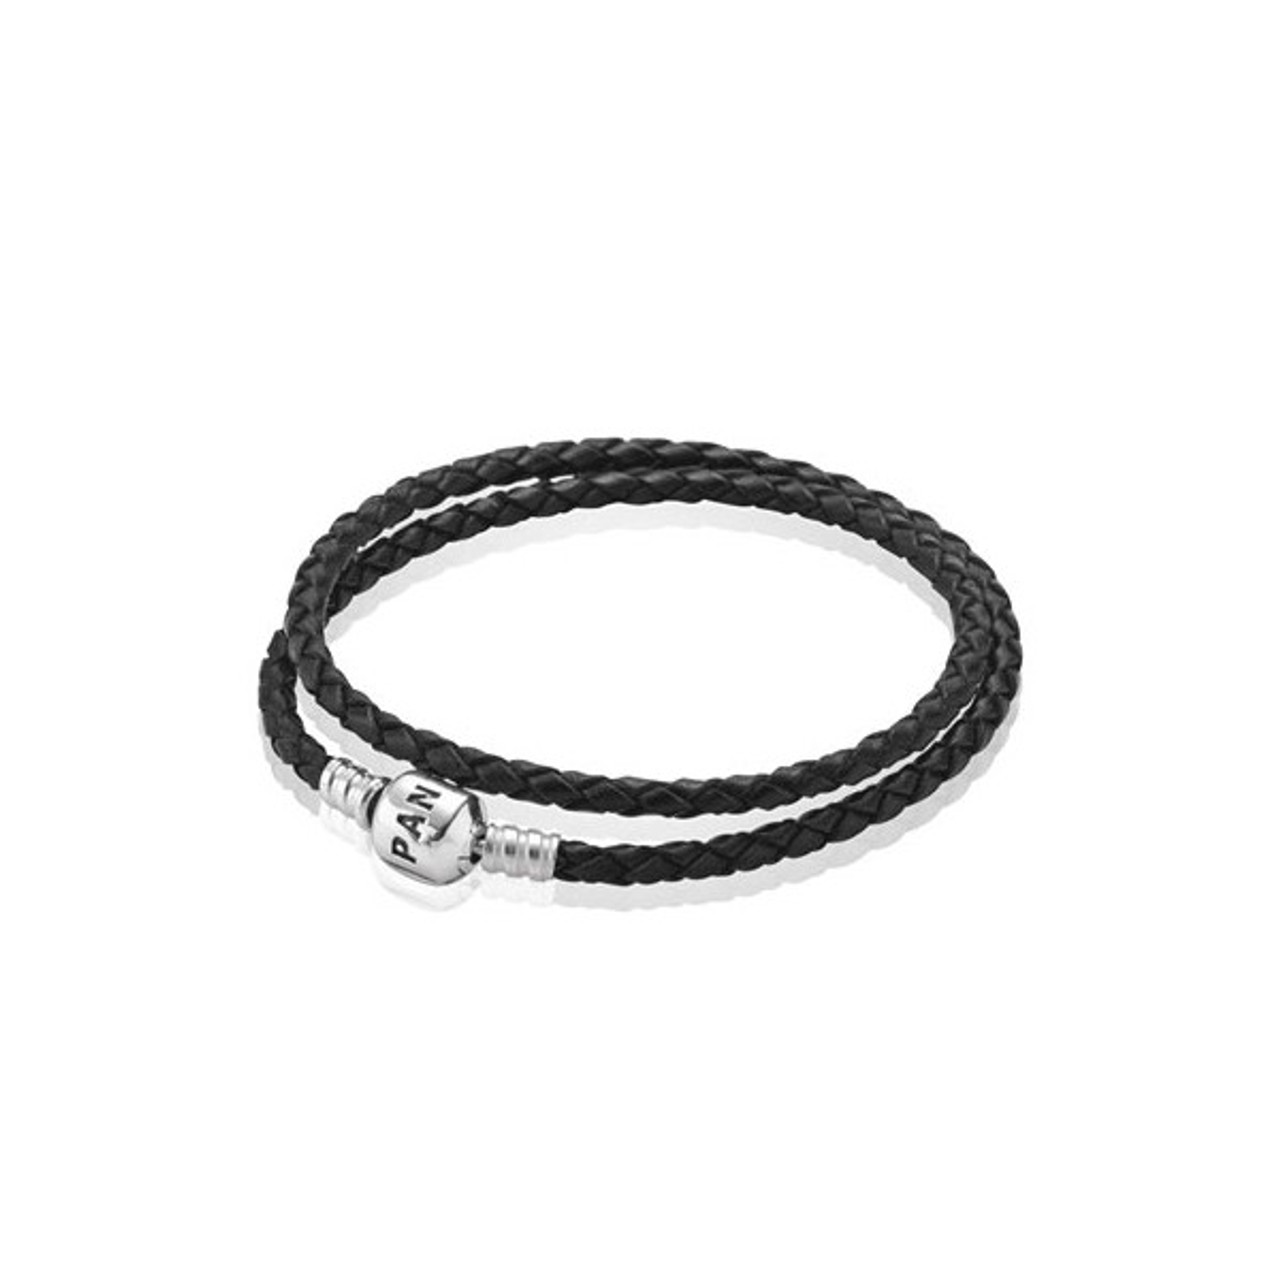 Pandora Double Black Leather Bracelet - 590705CBK-D1 - Jacob Time Inc